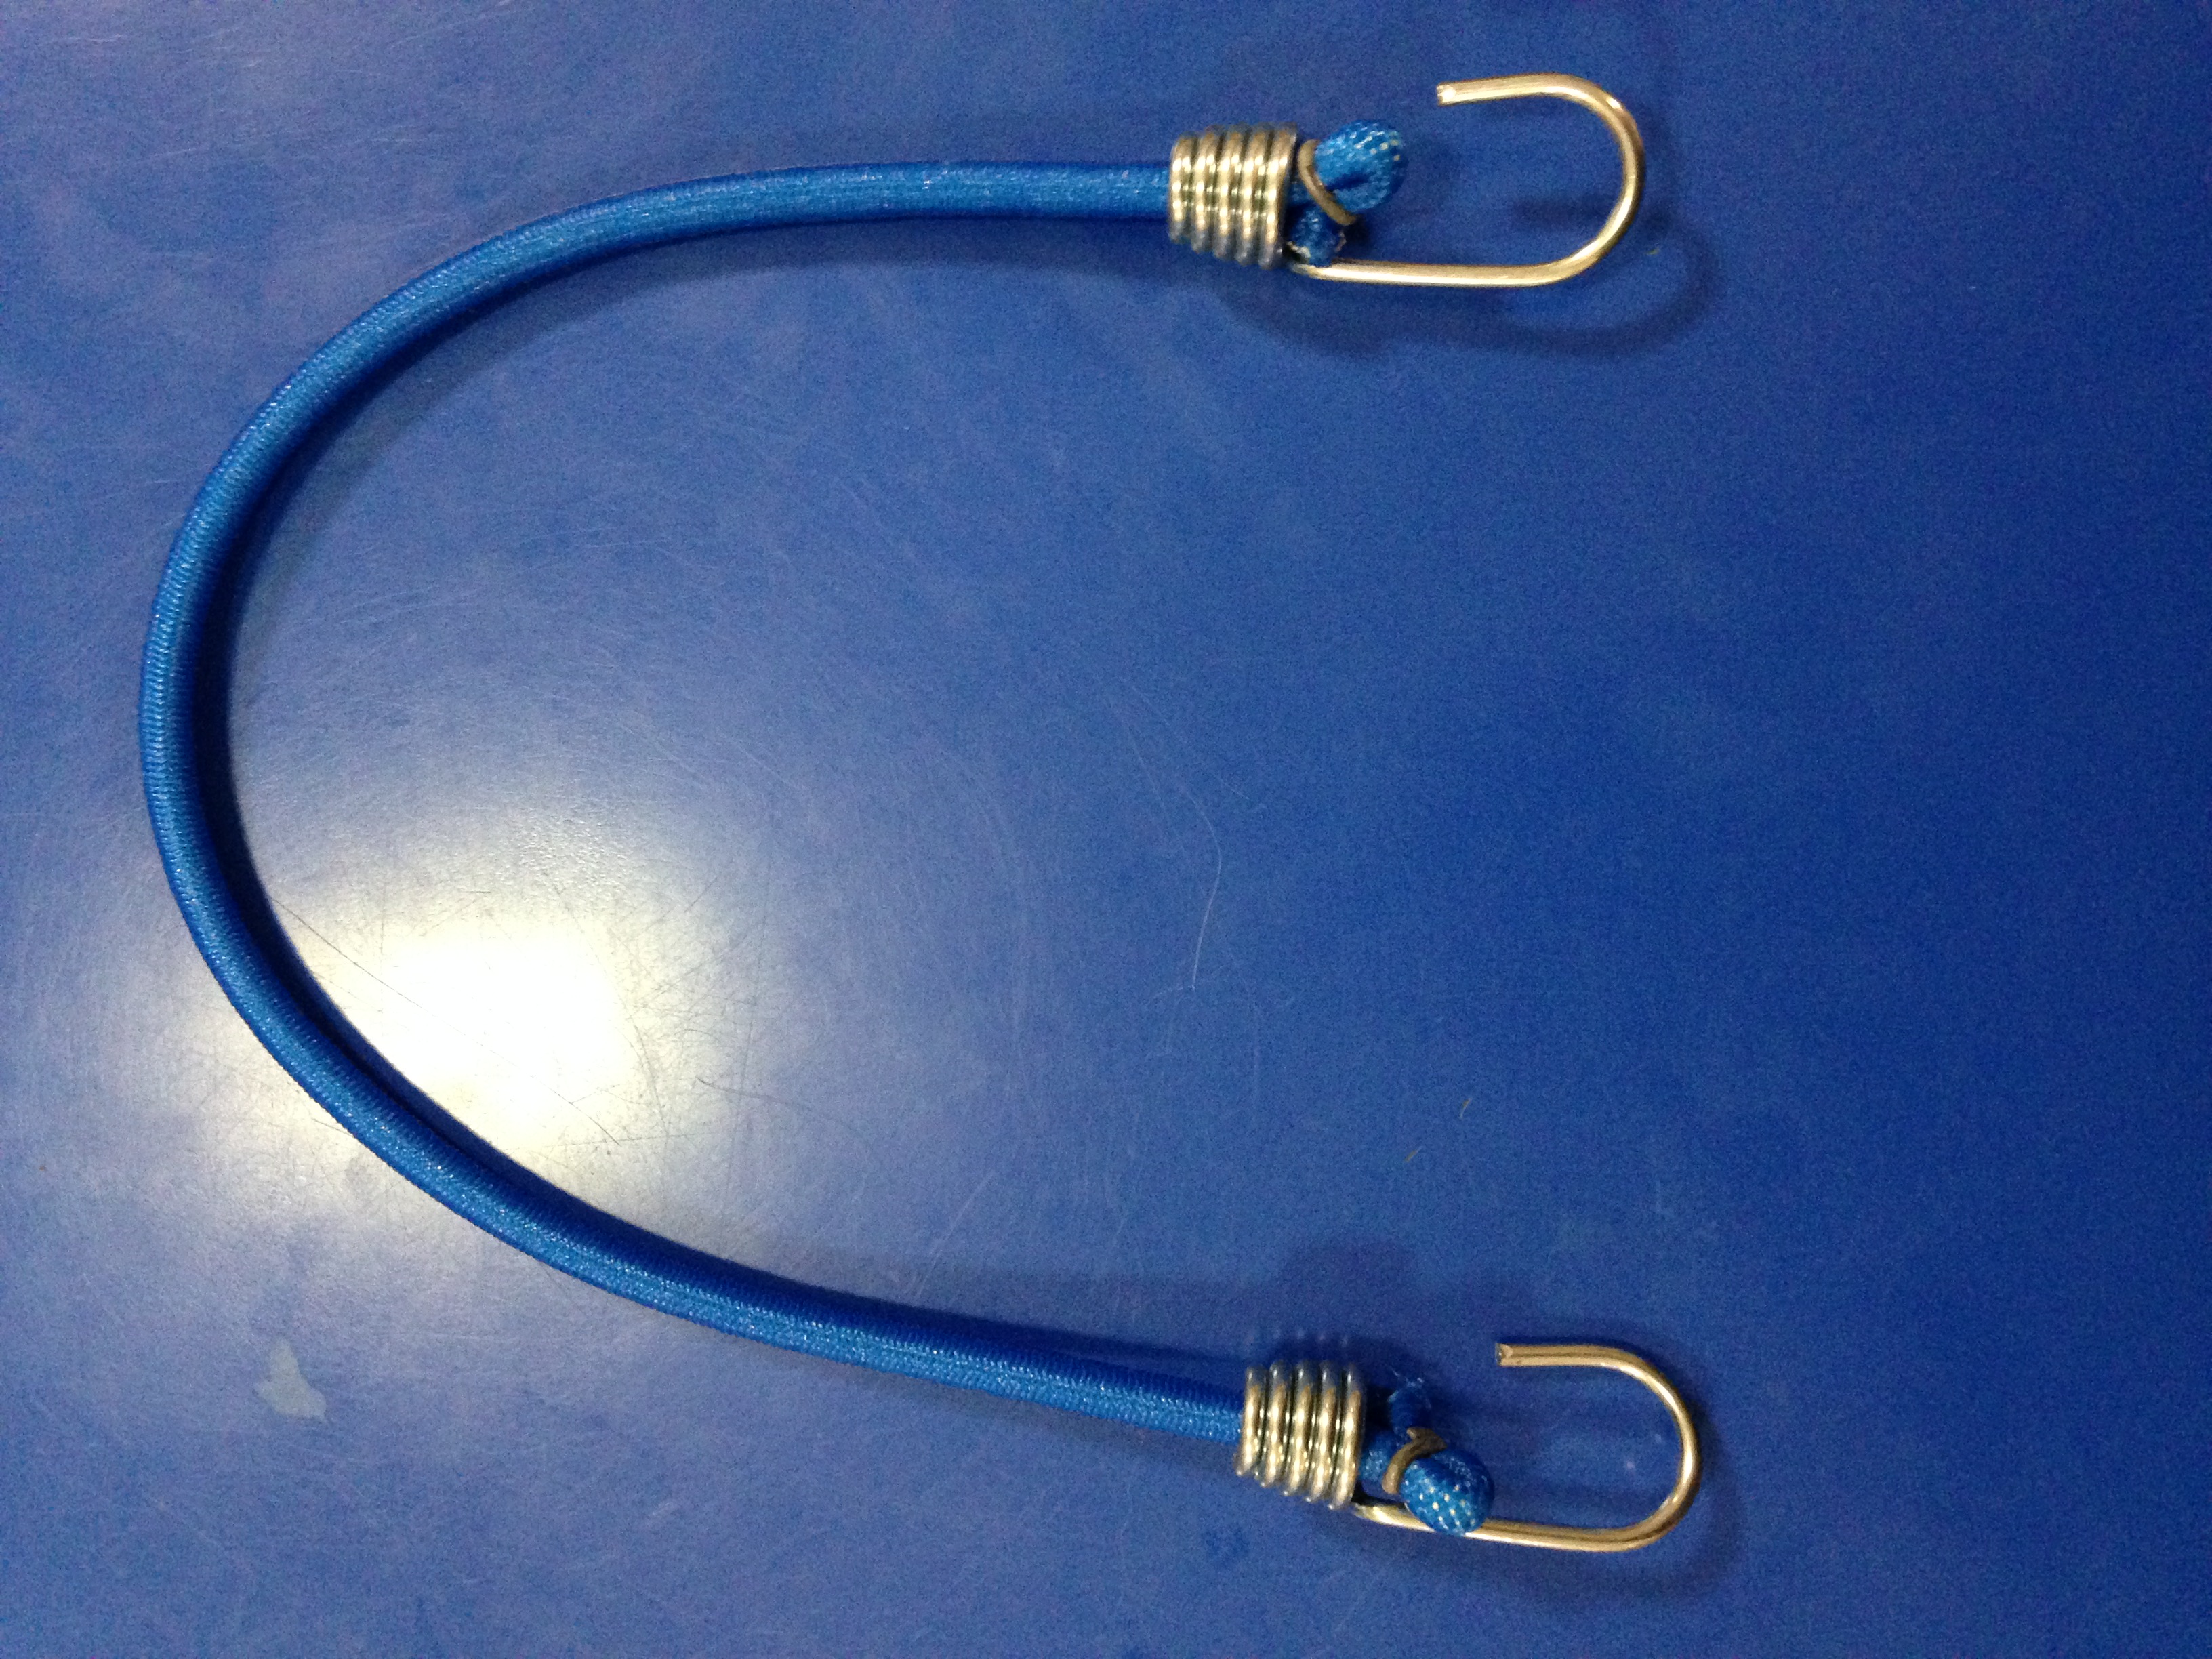 Sandow bleu avec embouts metal 60 cm / 